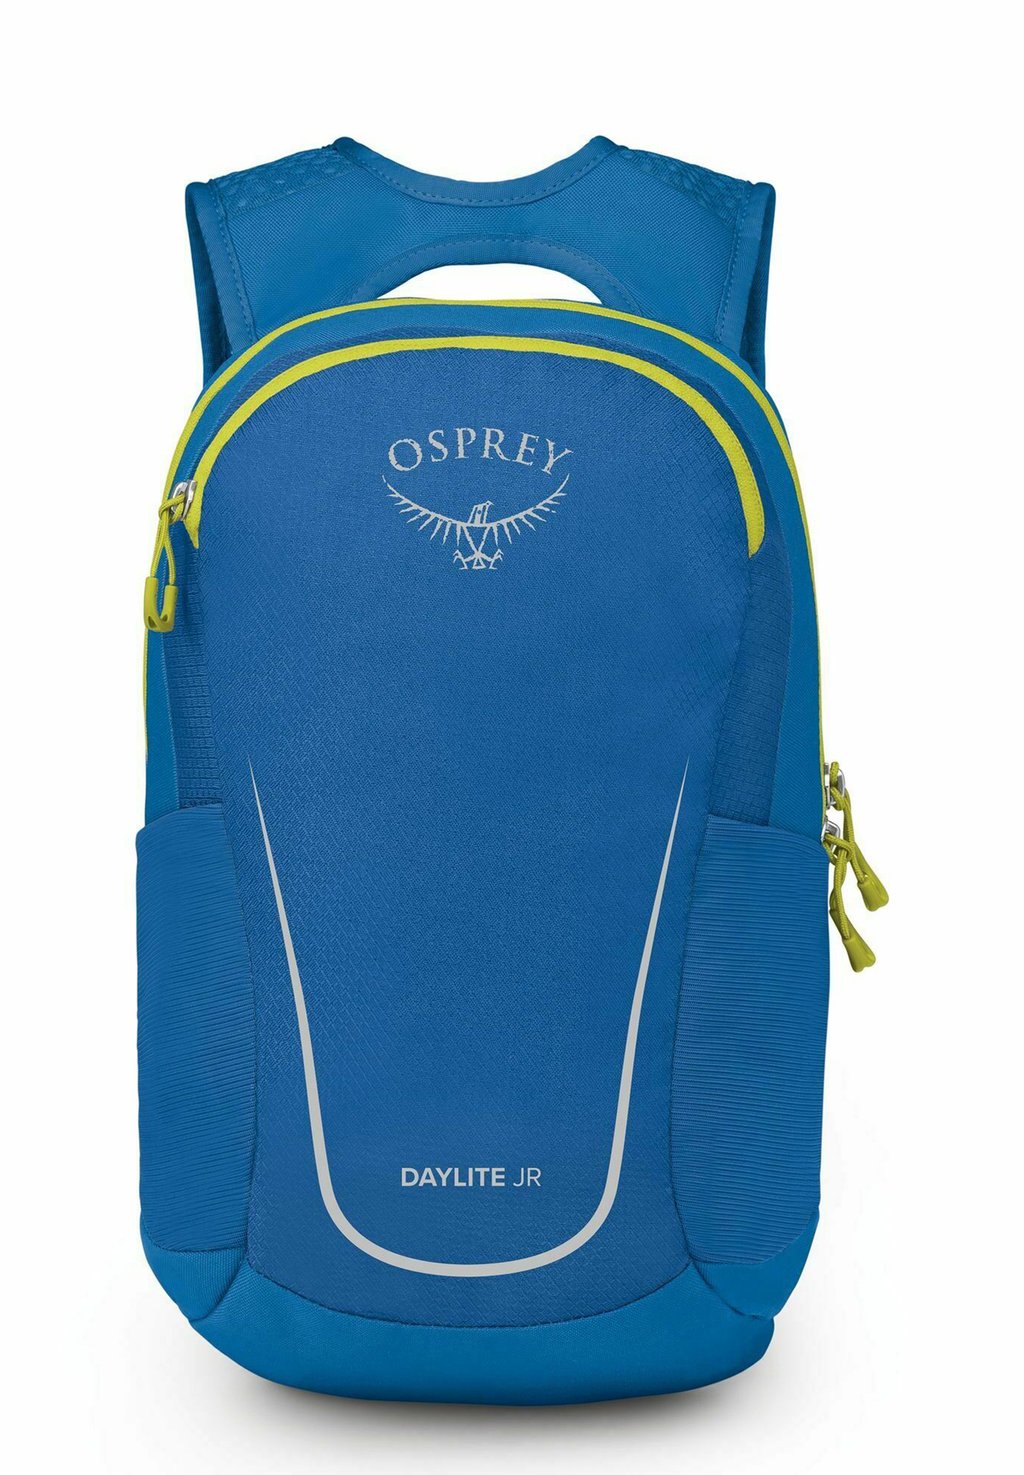 Рюкзак DAYLITE JR Osprey, цвет slate grey tungsten цена и фото